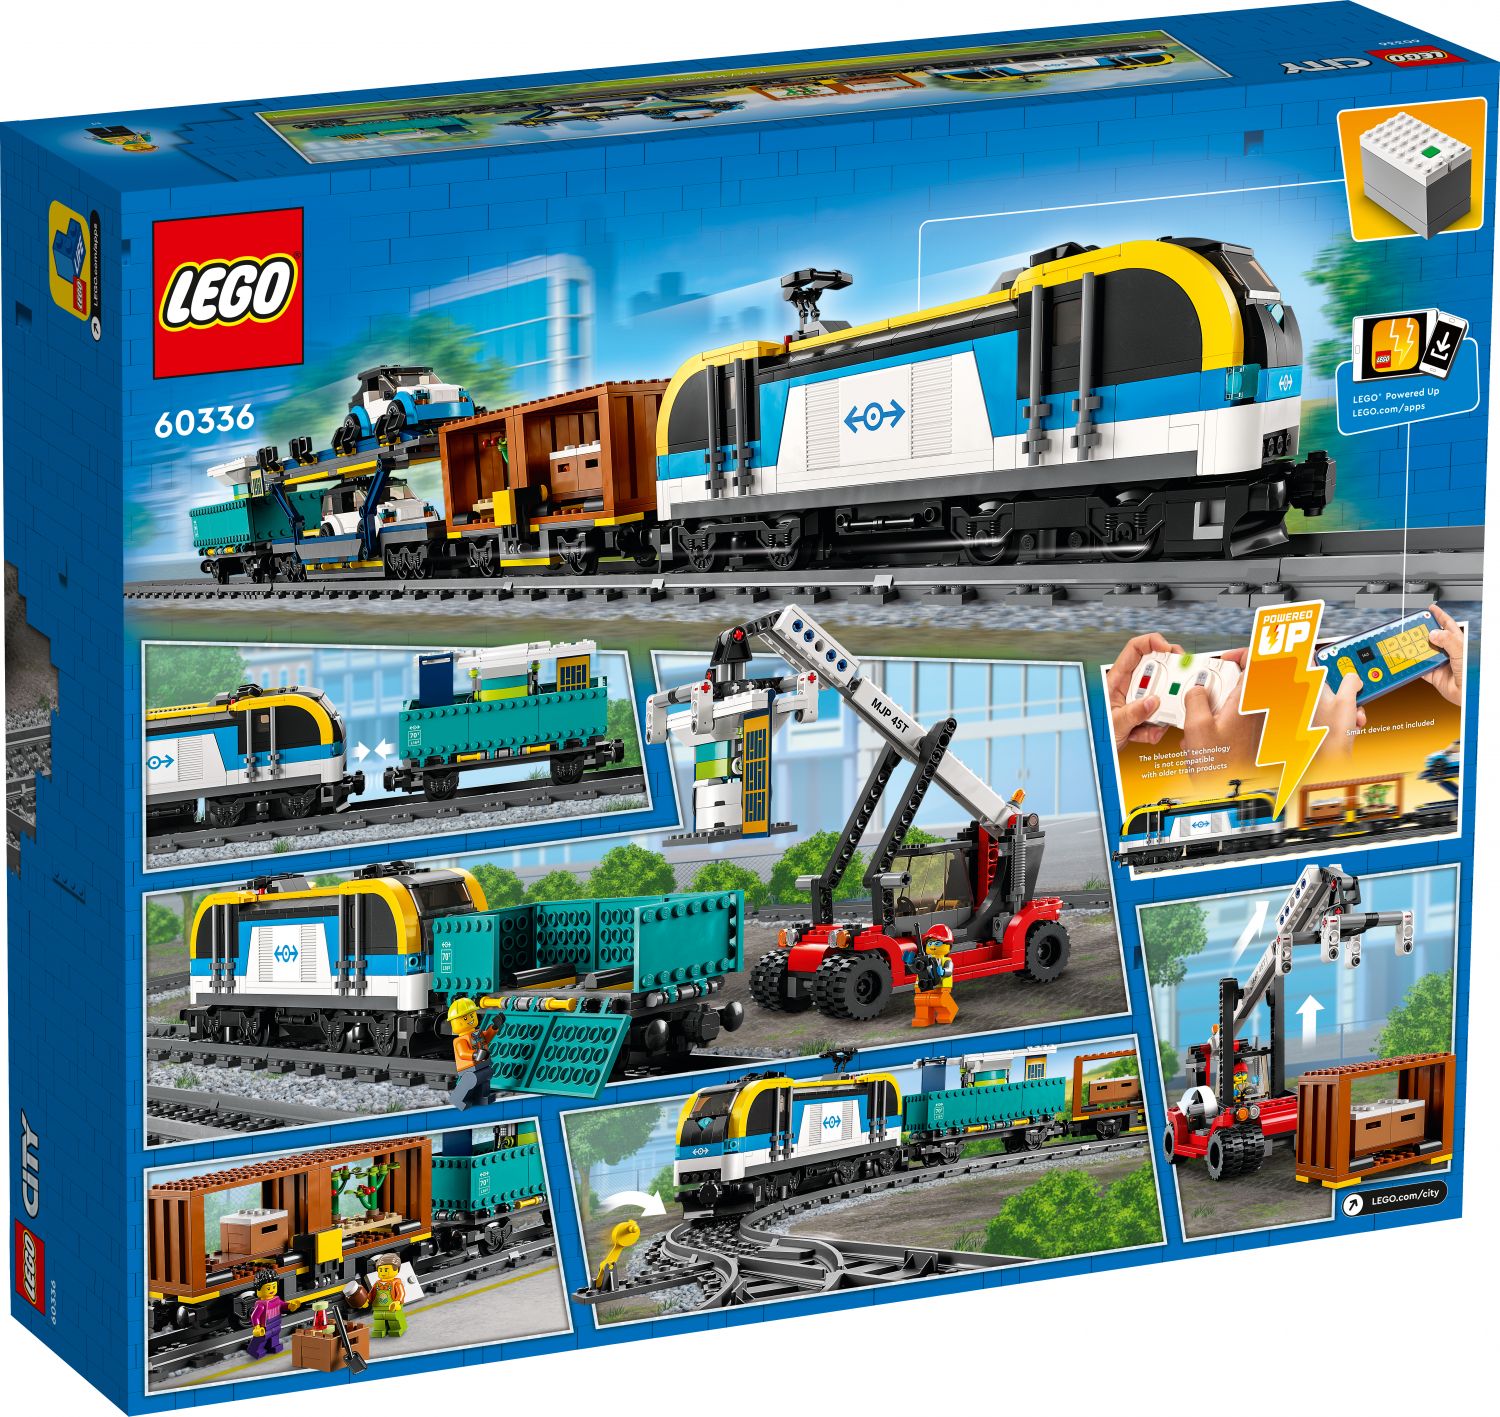 https://www.thebrickfan.com/wp-content/uploads/2022/04/LEGO-City-Freight-Train-60336-2.jpg